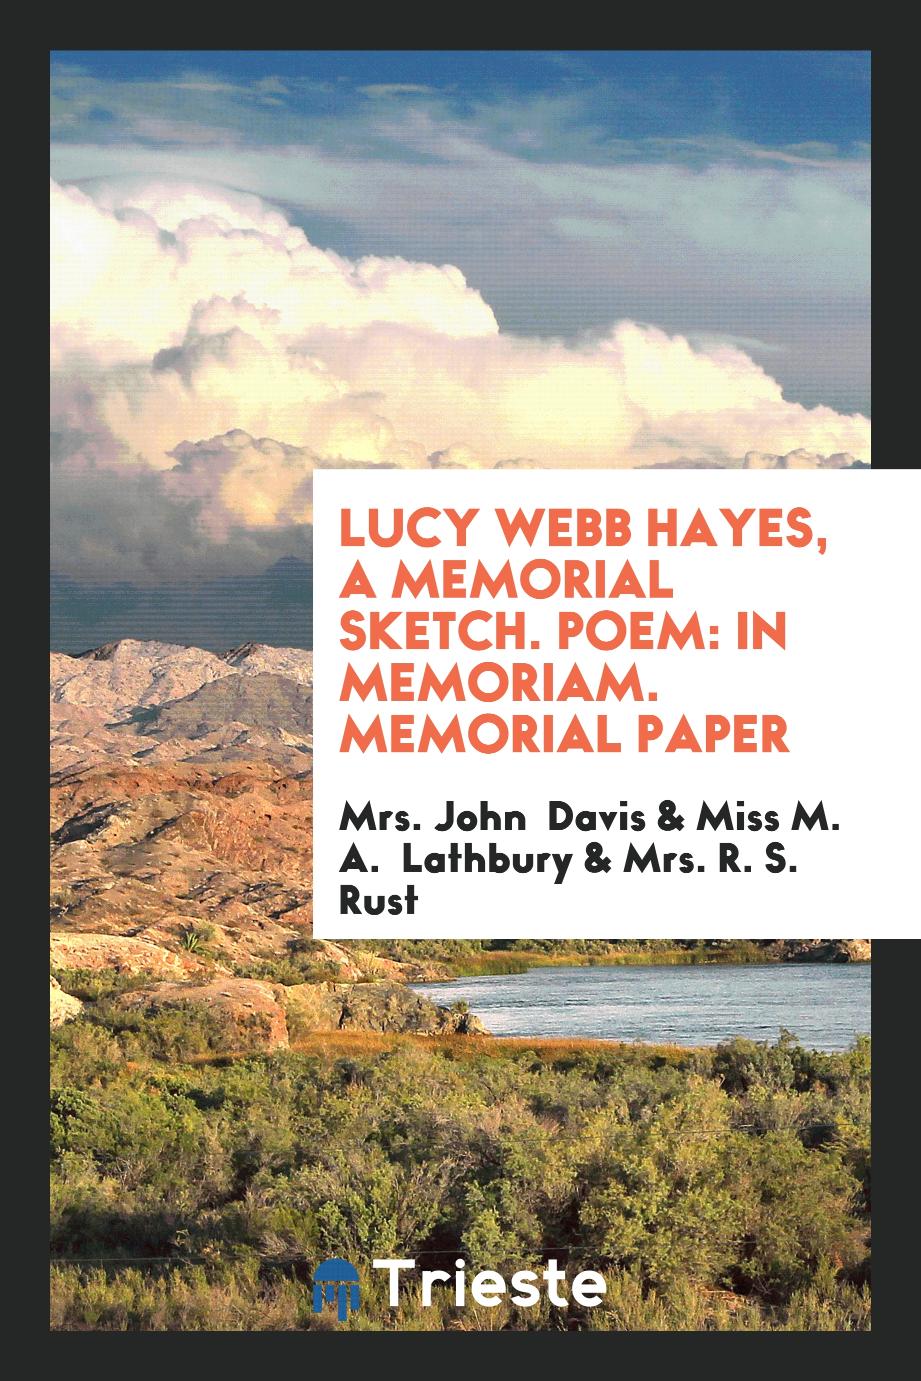 Lucy Webb Hayes, a Memorial Sketch. Poem: In Memoriam. Memorial Paper